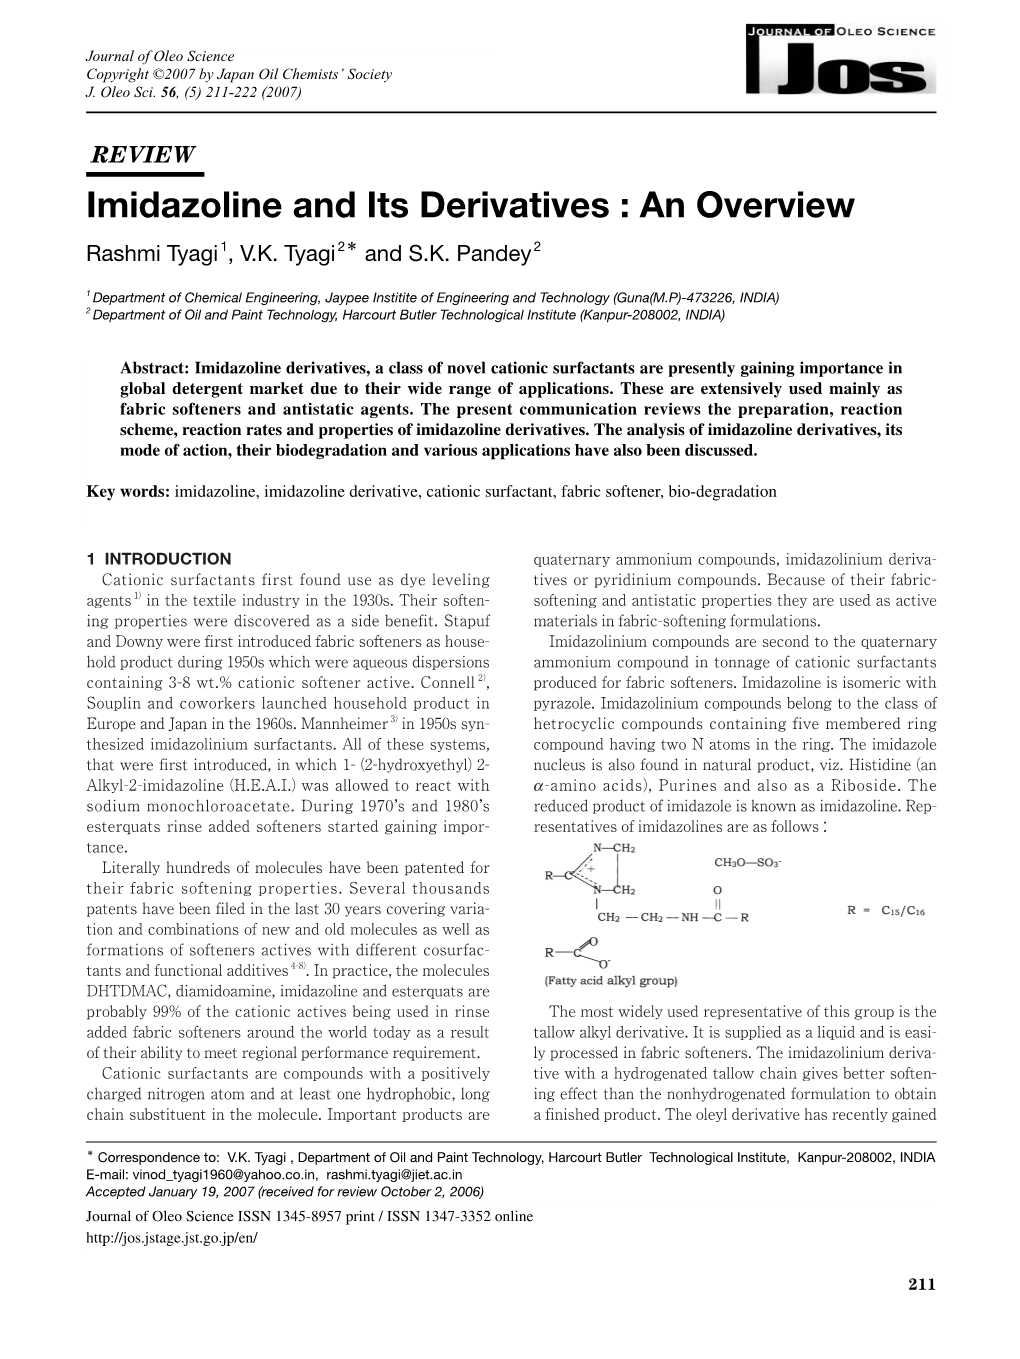 Imidazoline and Its Derivatives : an Overview Rashmi Tyagi 1, V.K